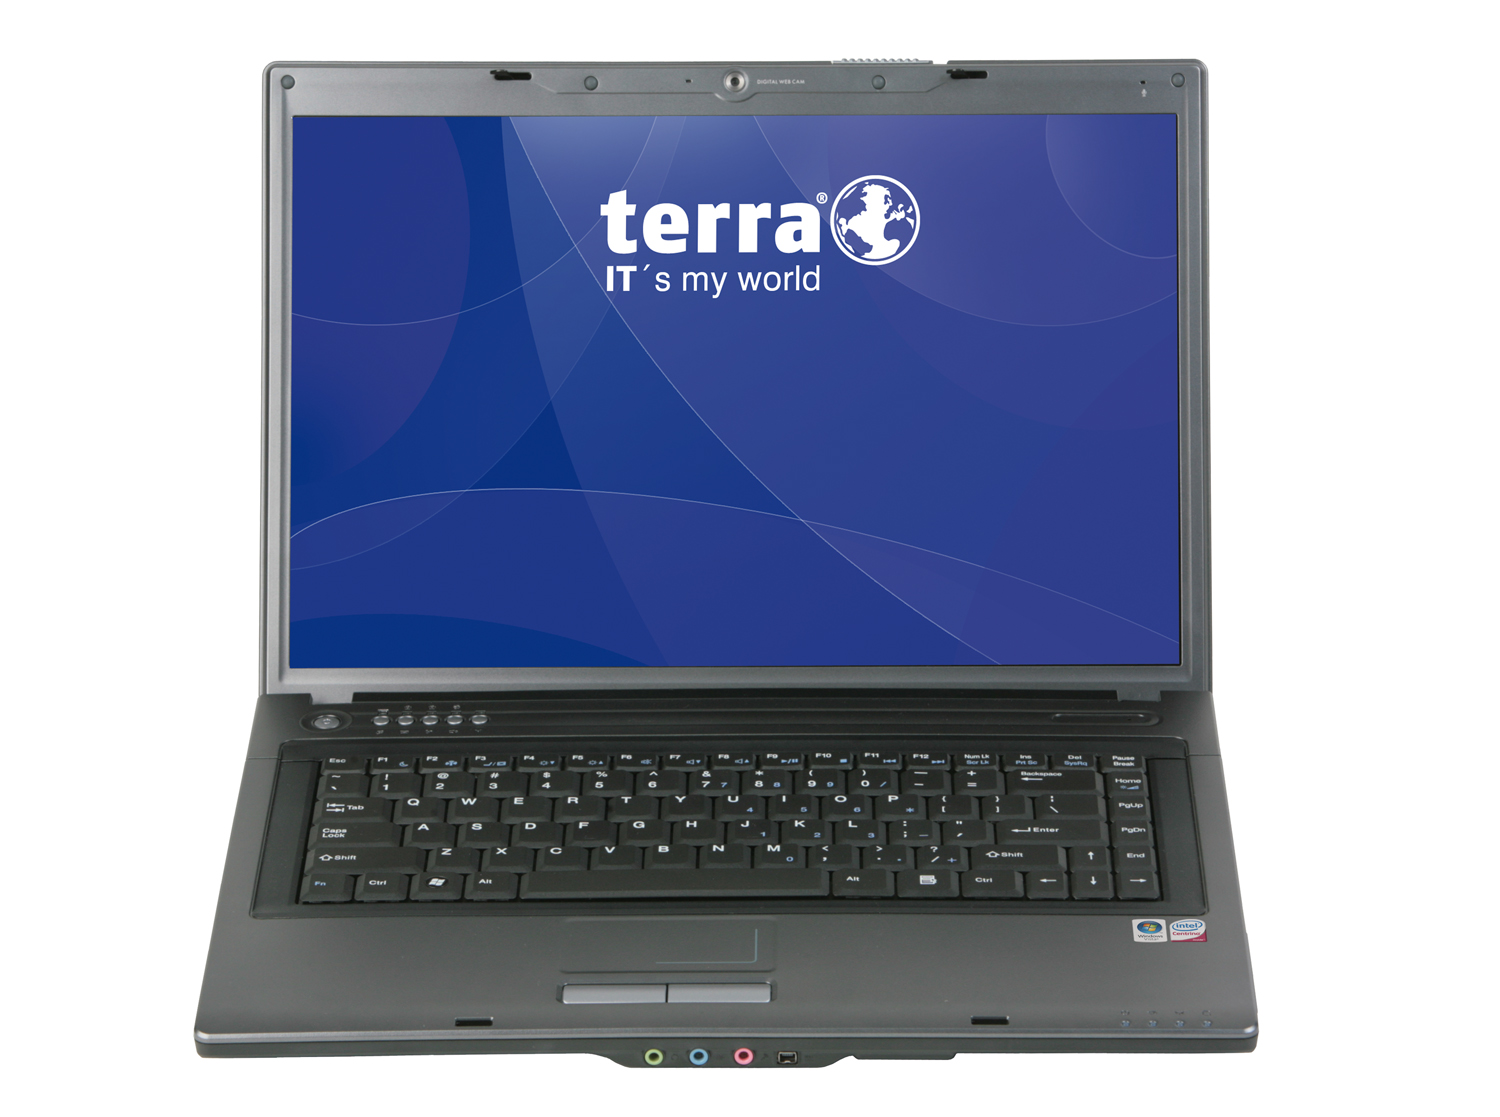 Terra Mobile 8410